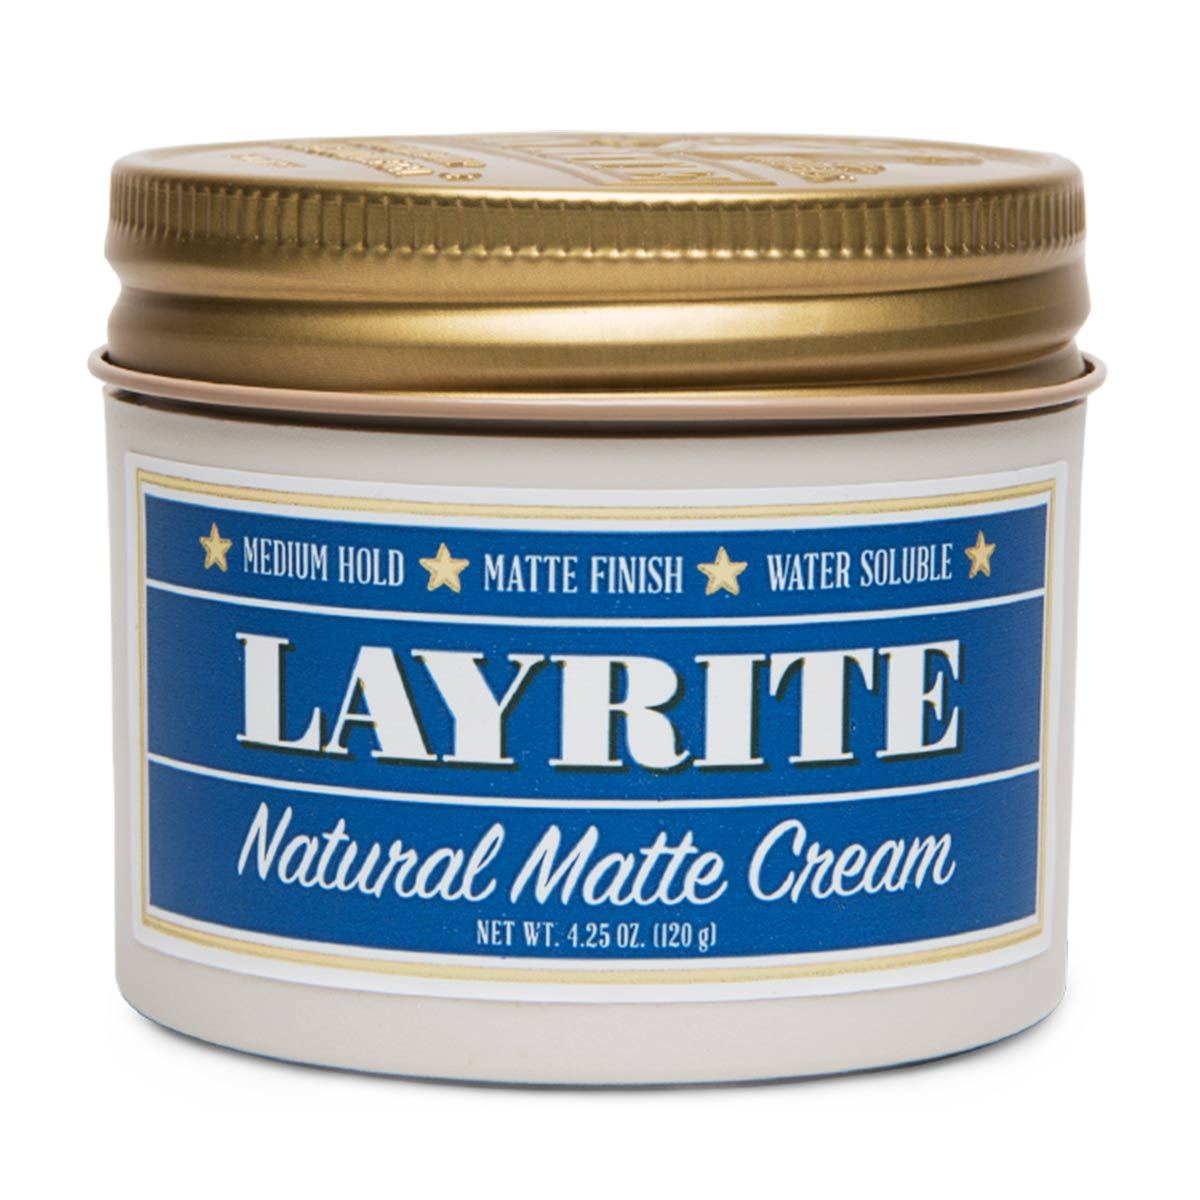 Primary image of Natural Matte Cream